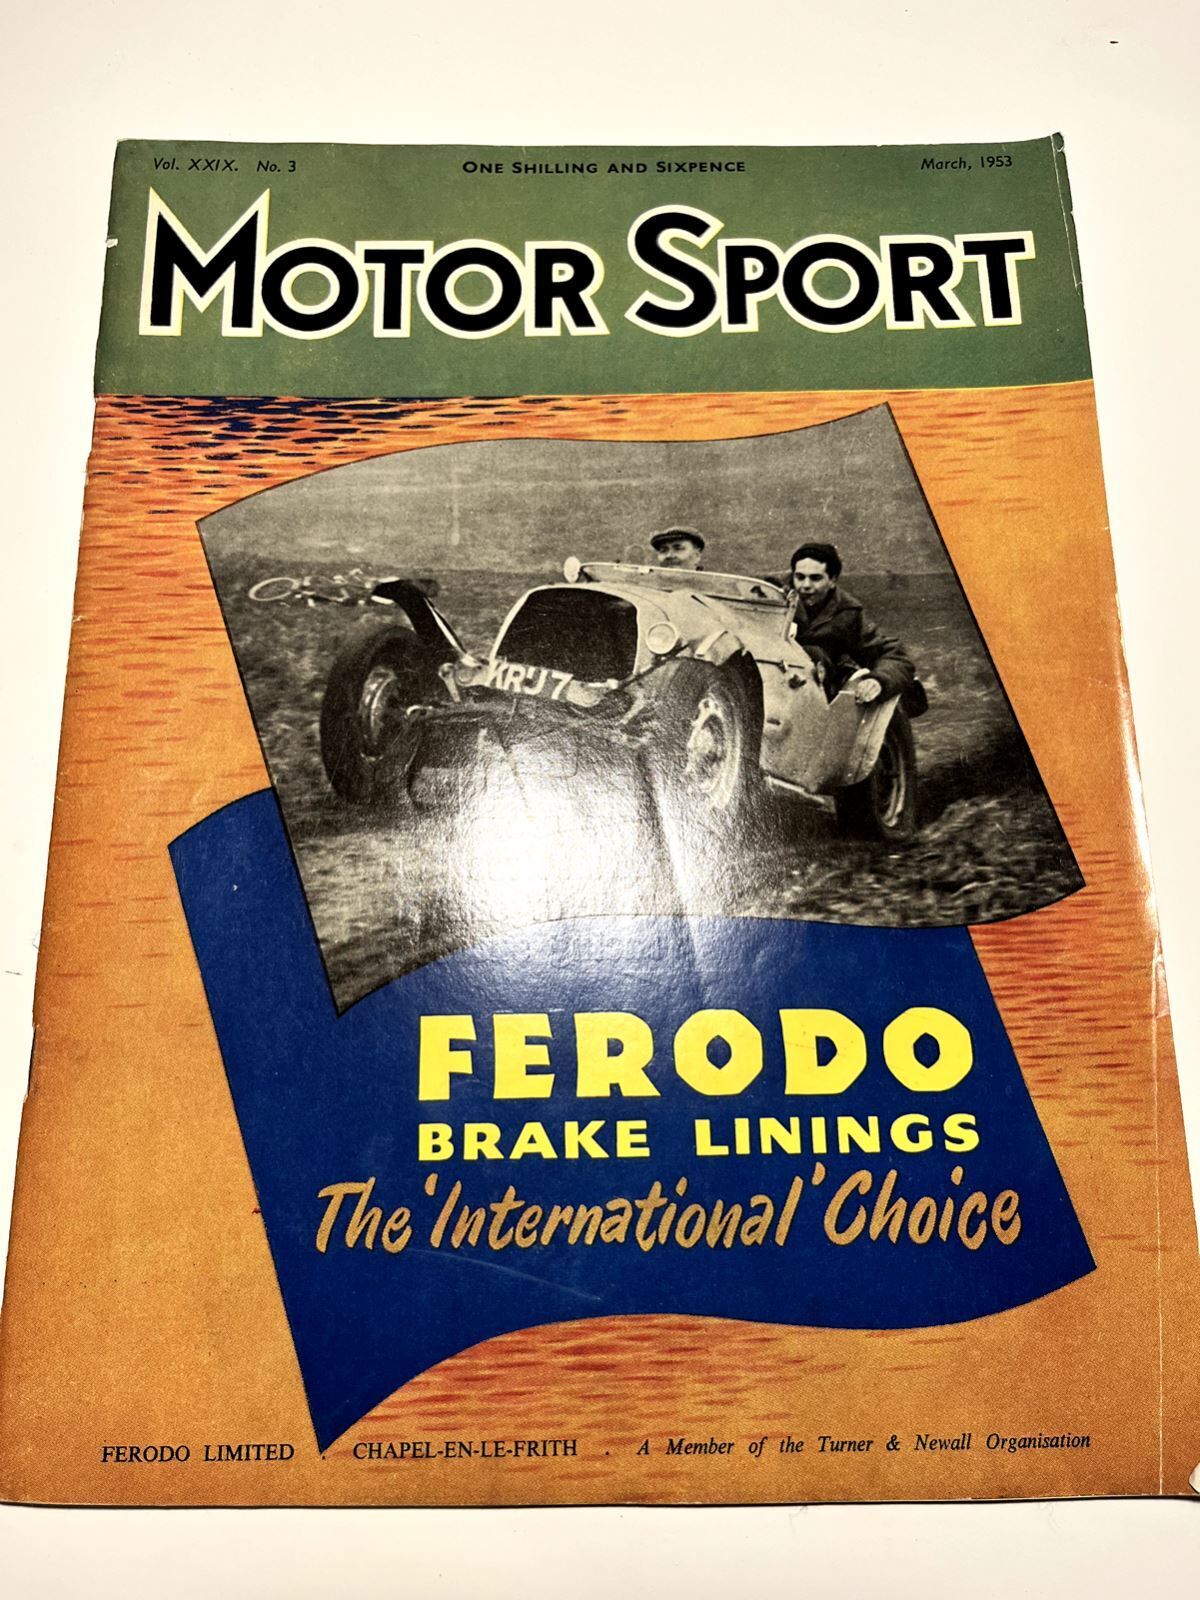 Vintage Motor Sport Magazine Vol. XXXIX, No. 3 March 1953